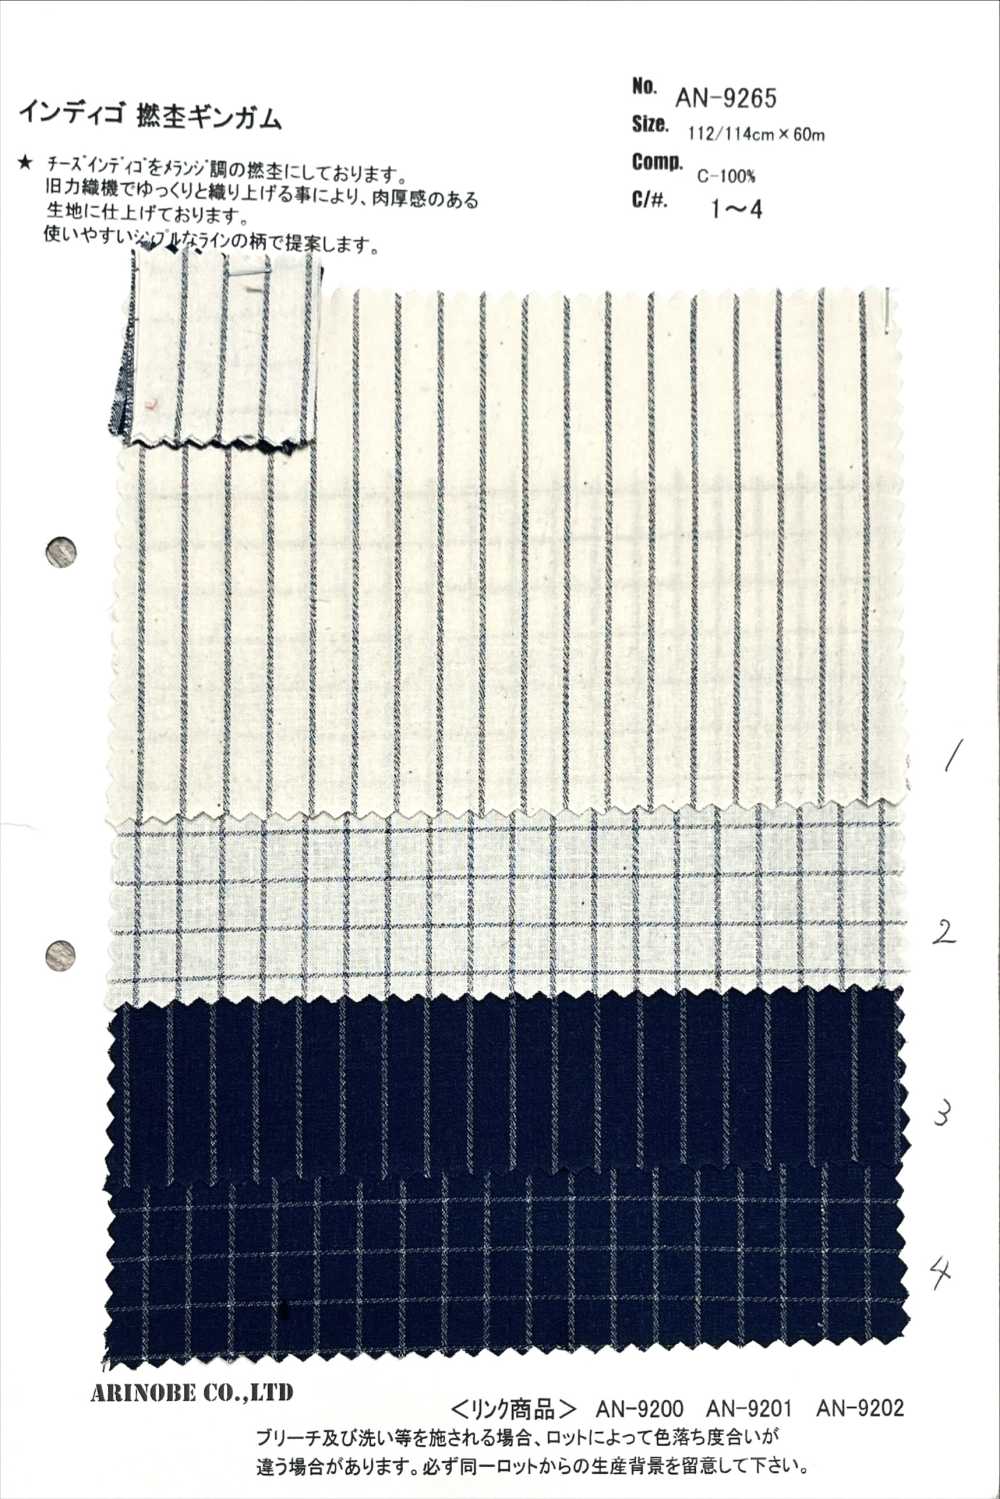 AN-9265 Indigo Twisted Gingham[Textilgewebe] ARINOBE CO., LTD.